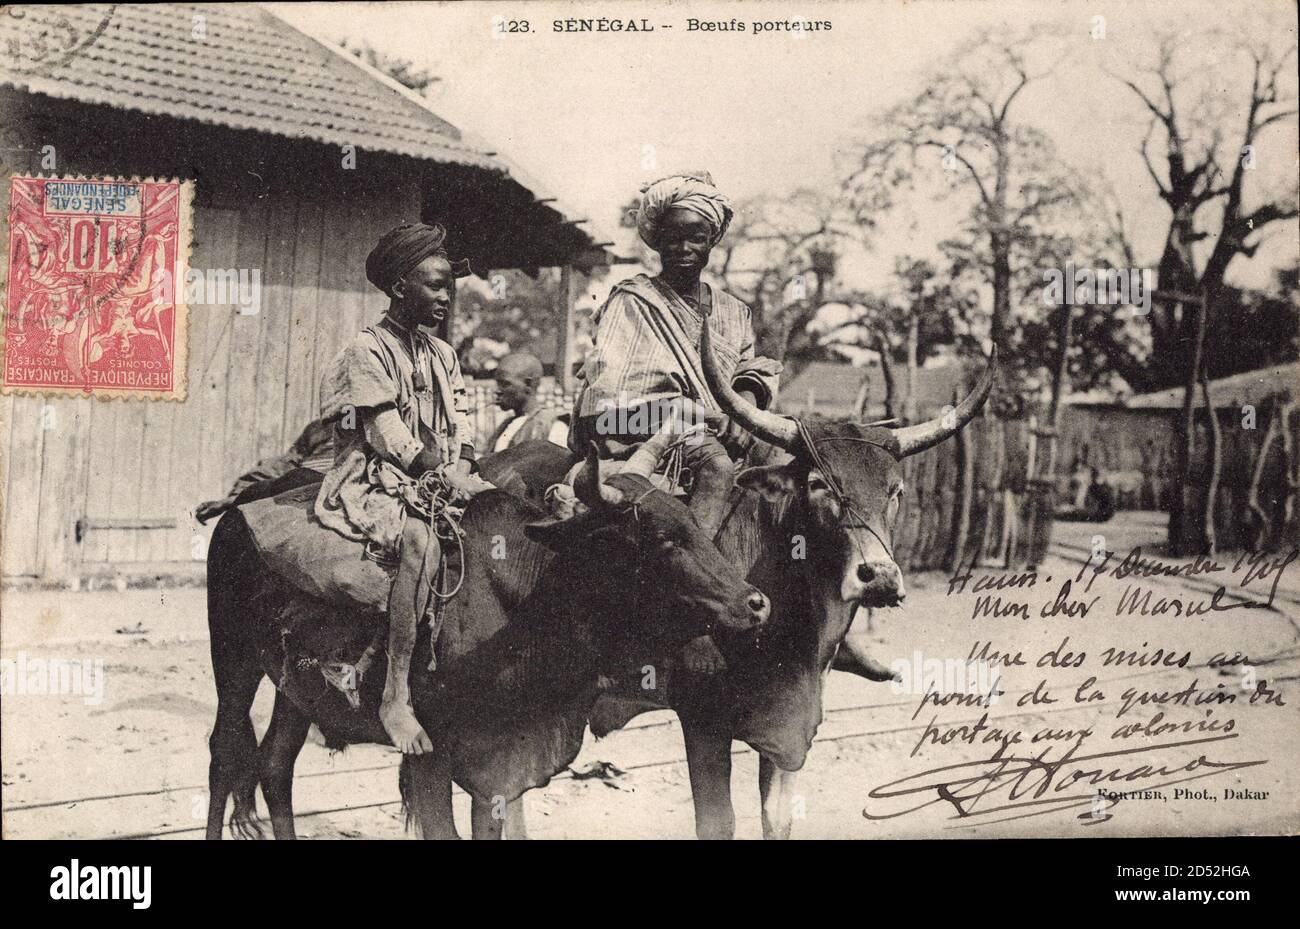 Senegal Westafrika, Boeufs porteurs, Anwohner auf Rindern | usage worldwide Stock Photo